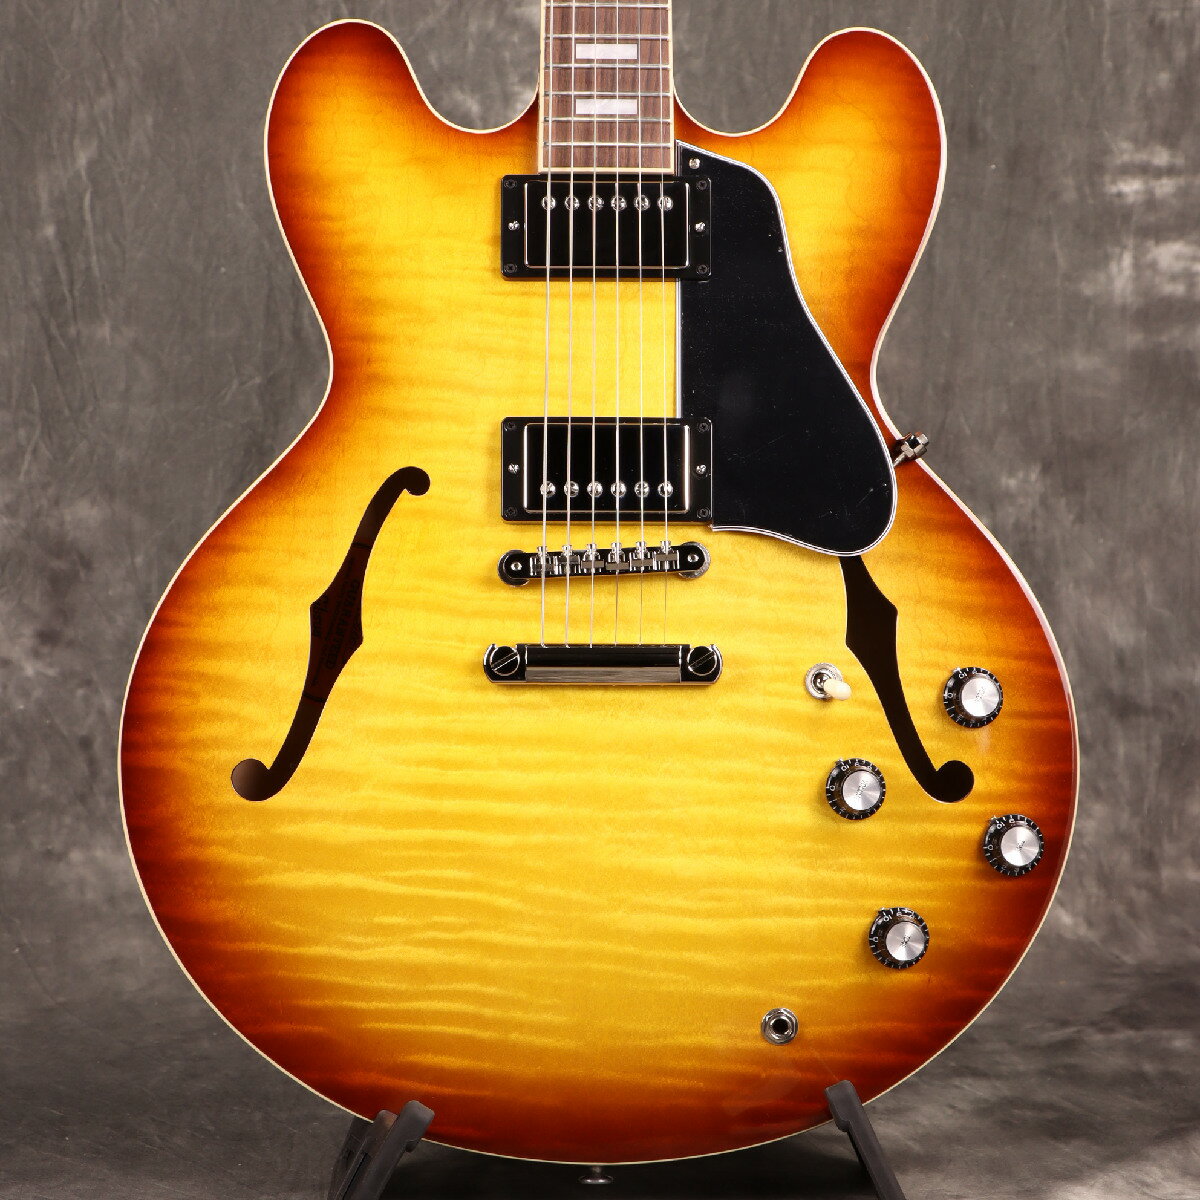 Gibson USA / ES-335 Figured Iced Tea Mu\ Z~AR y摜/Wiz[3.58kg][S/N 229230001]s+4582600680067tyYRKz